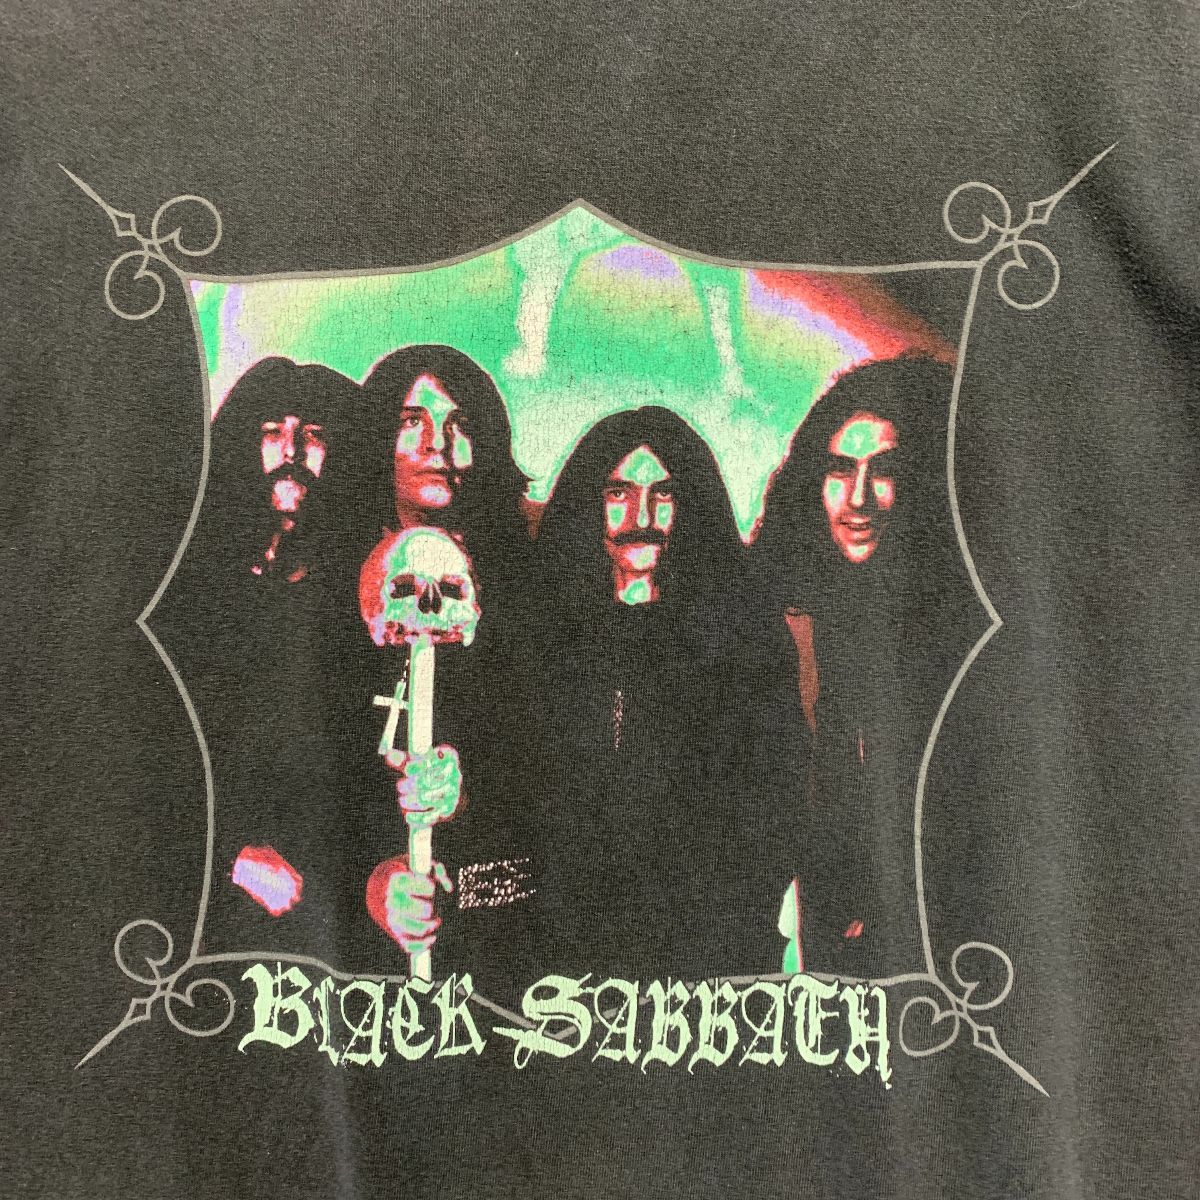 Vintage | Black Sabbath Boxy As-is Band T-shirt Distressed Cut Boardwalk